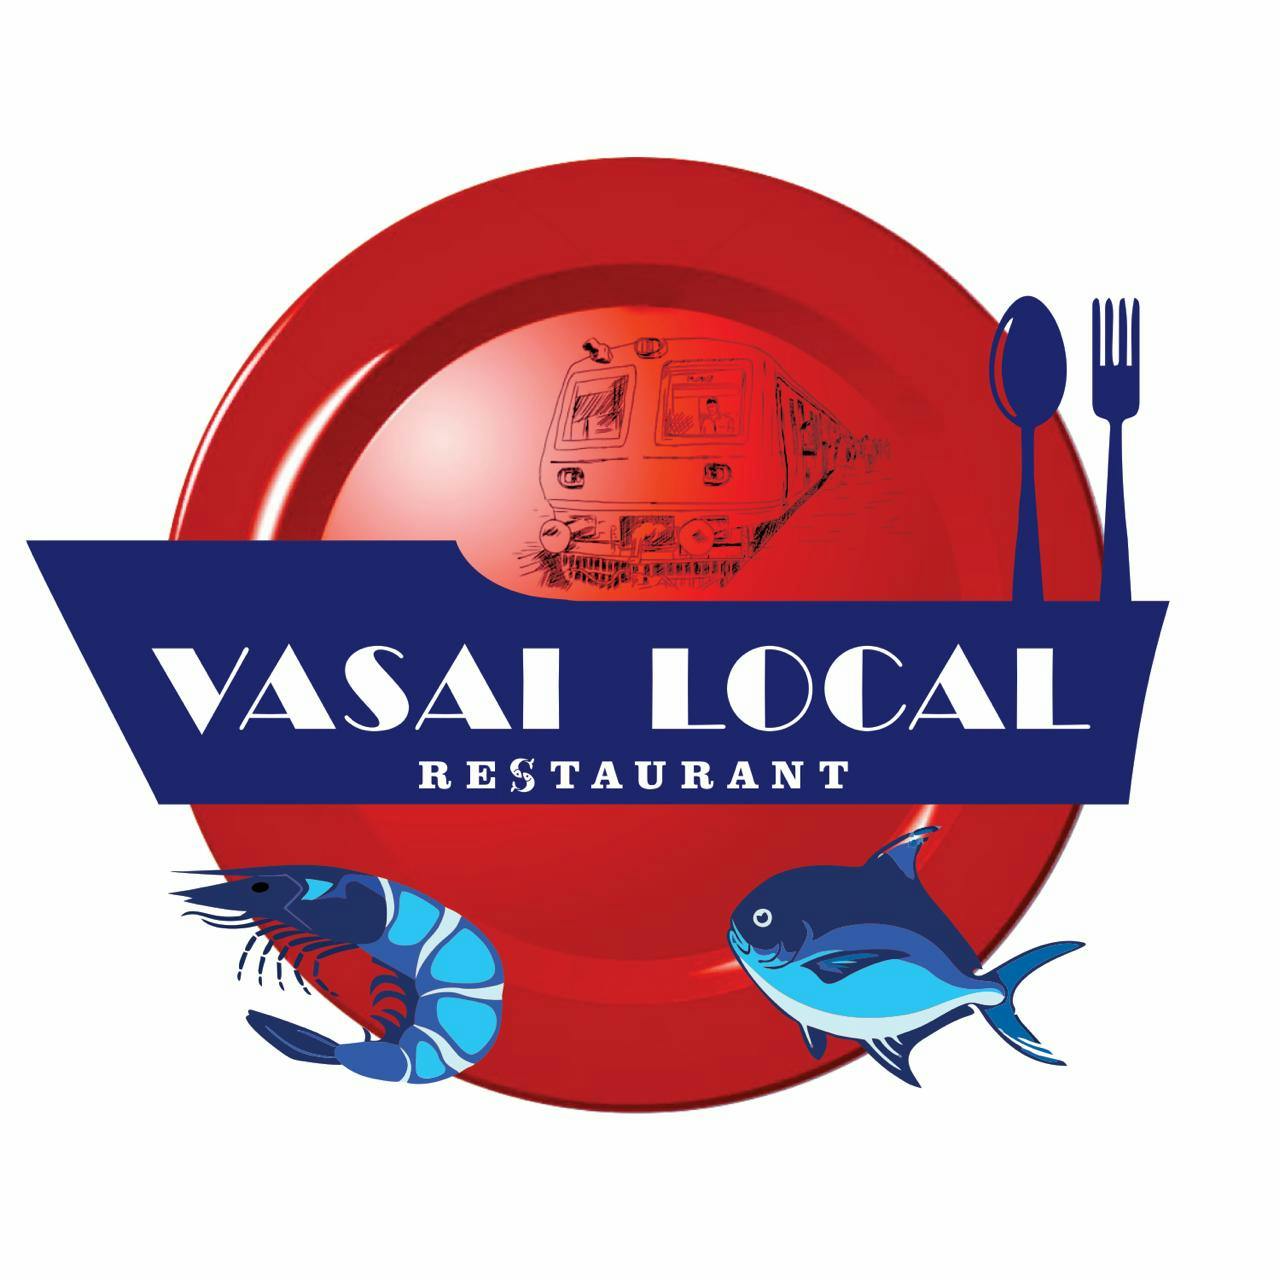 Vasai Local Restaurant Brand Logo